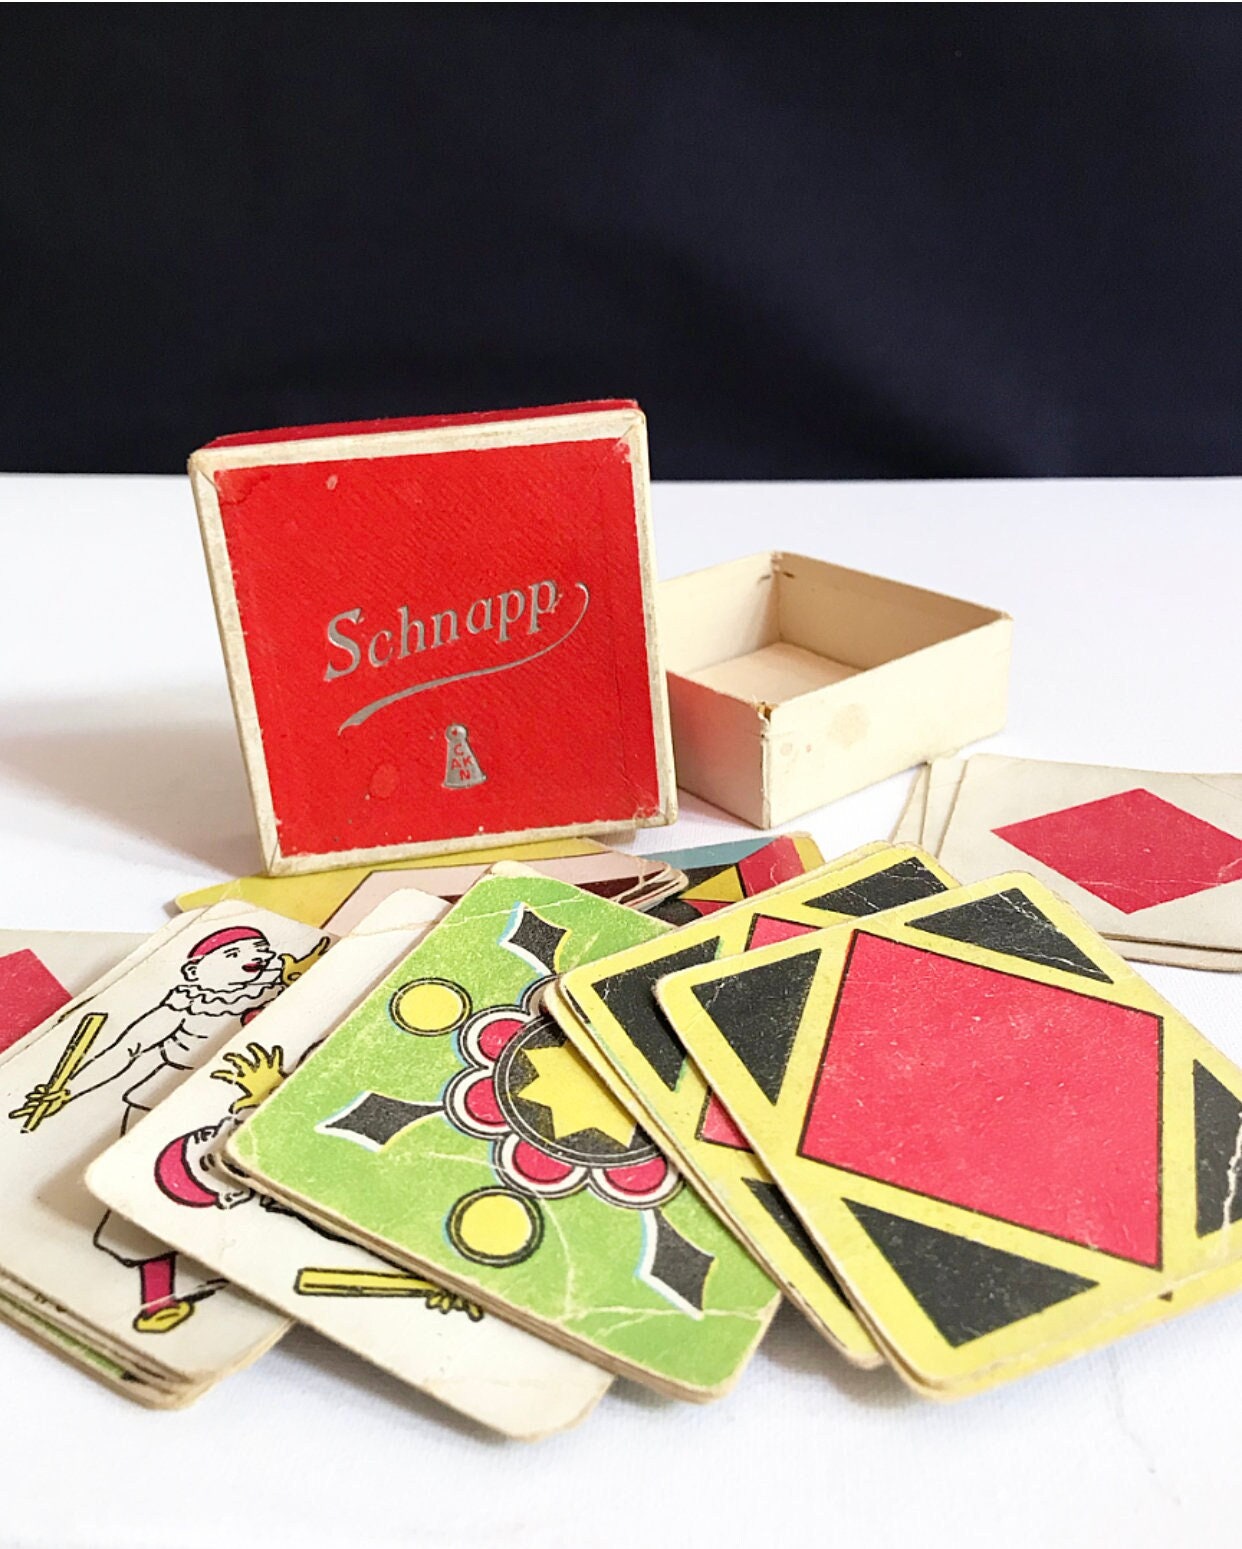 Schnapp Etsy No. Parlor New Antique schnipp / Zealand Liliput Game -